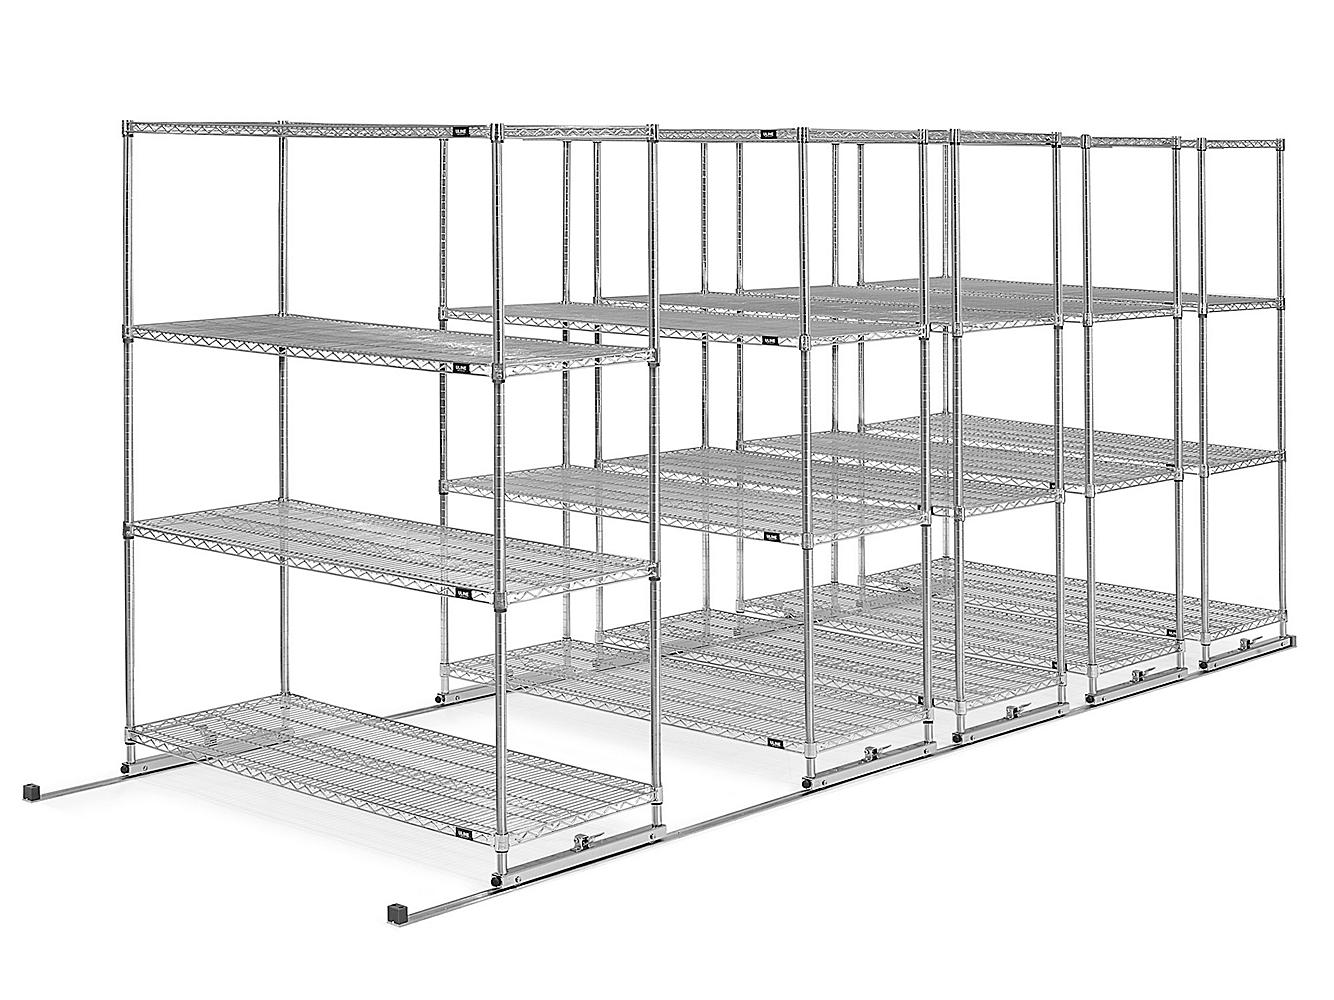 Sliding Storage Shelves - 60 x 177 x 74